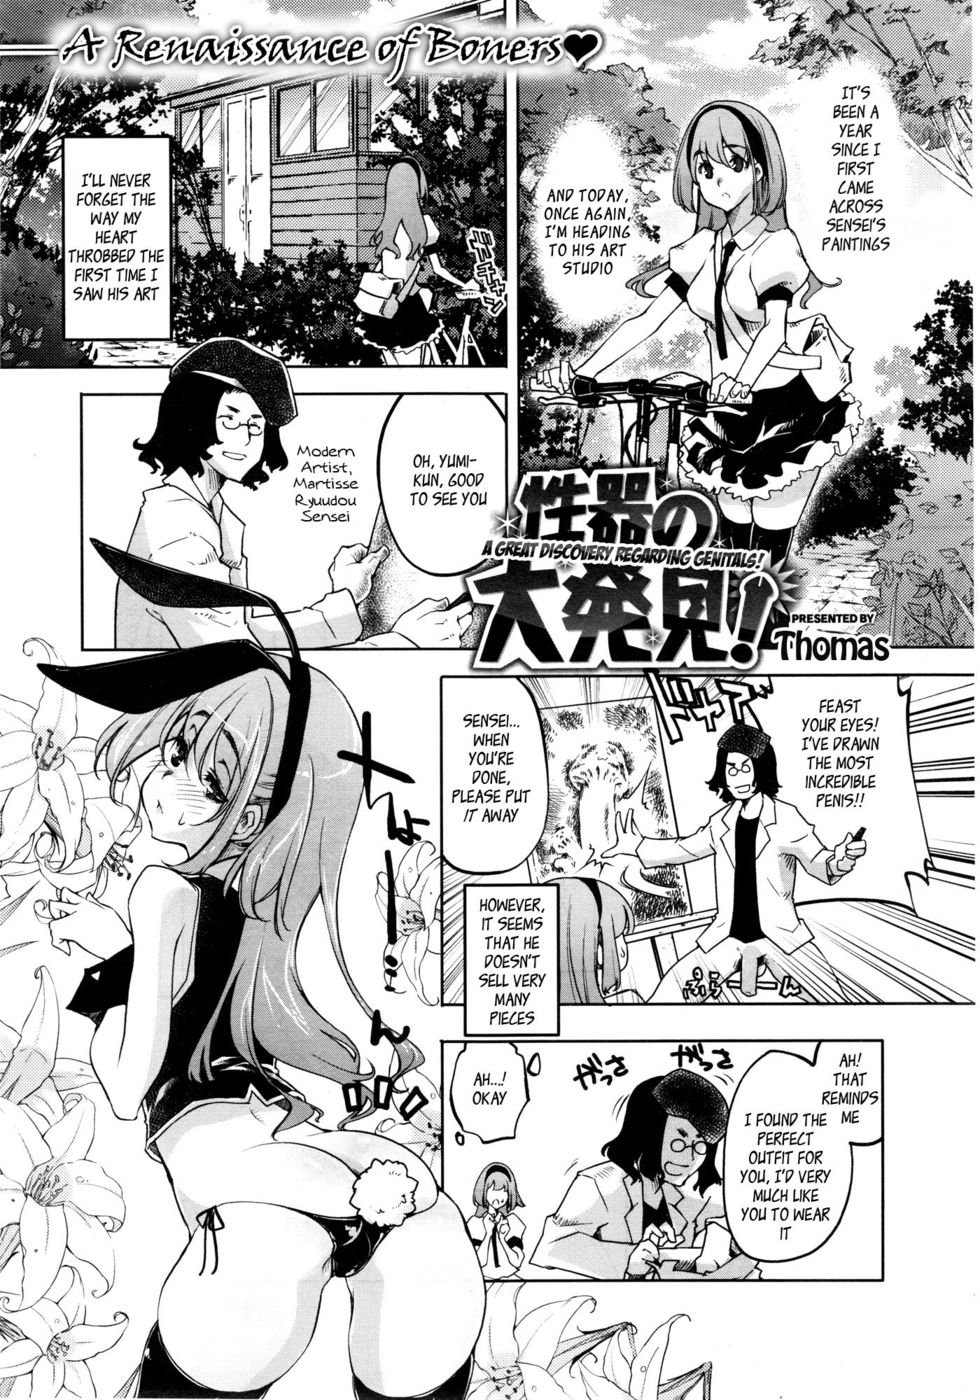 Hentai Manga Comic-A Great Discovery Regarding Genitals-Read-1